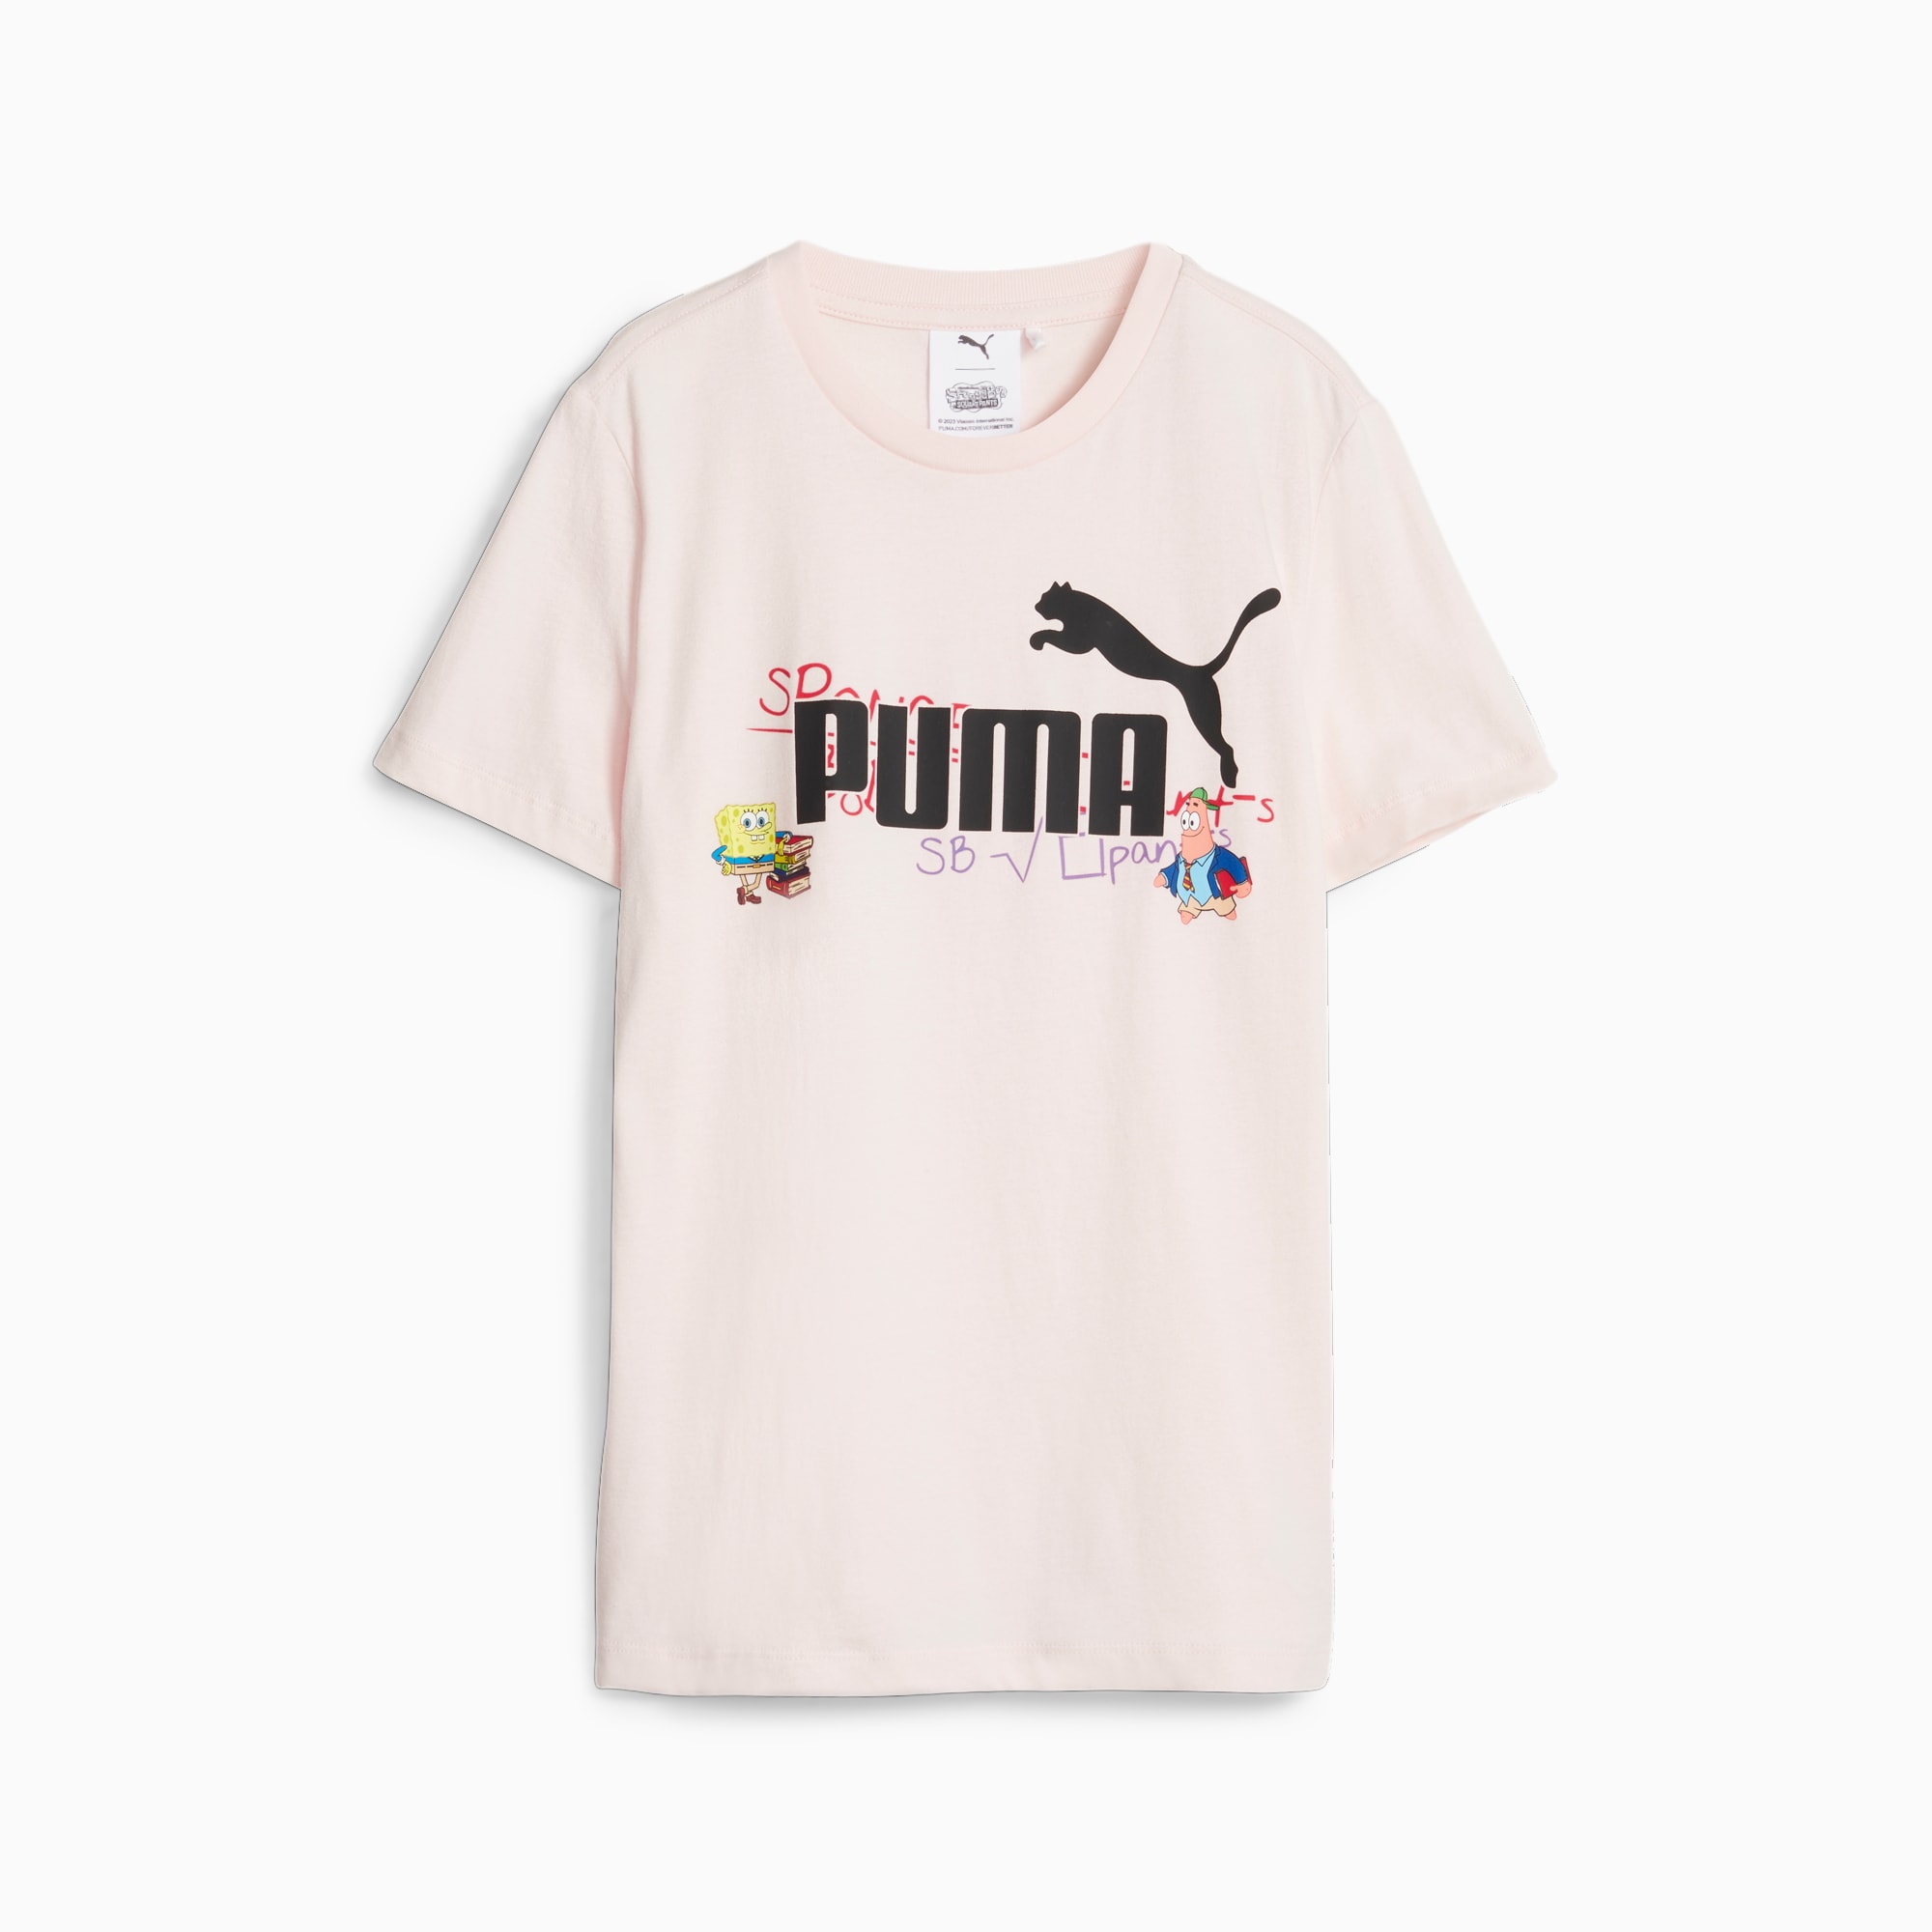 PUMA Camiseta Juvenil X Spongebob Squarepants, Rosado